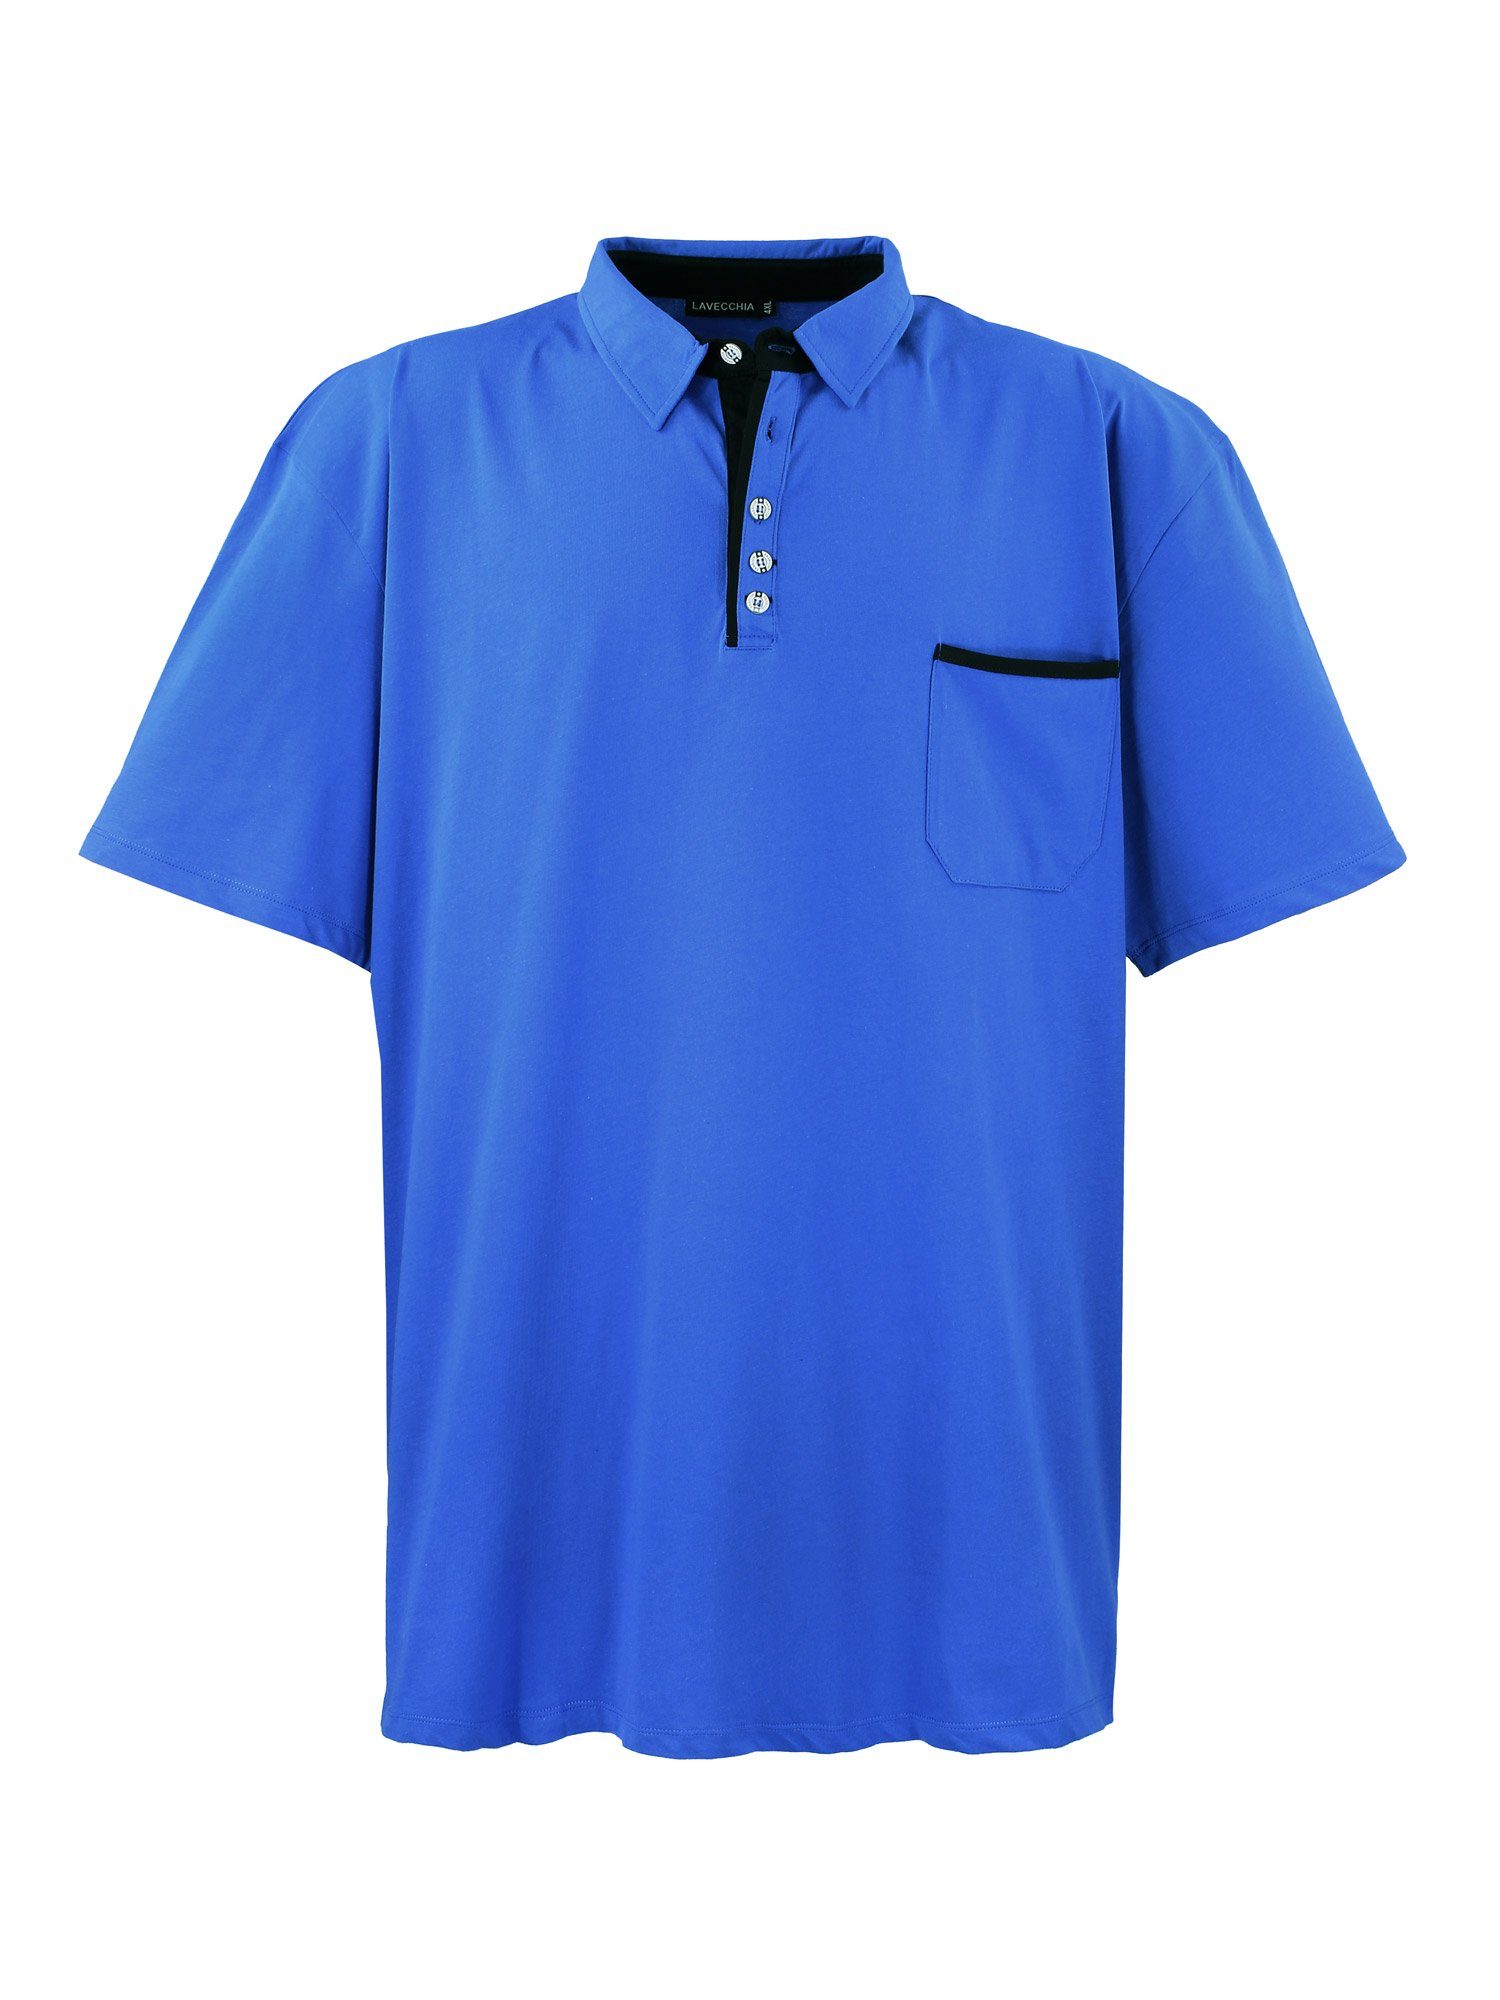 Shirt Lavecchia Poloshirt Herren Herren royalblau Übergrößen Polo LV-1701 Polo Shirt